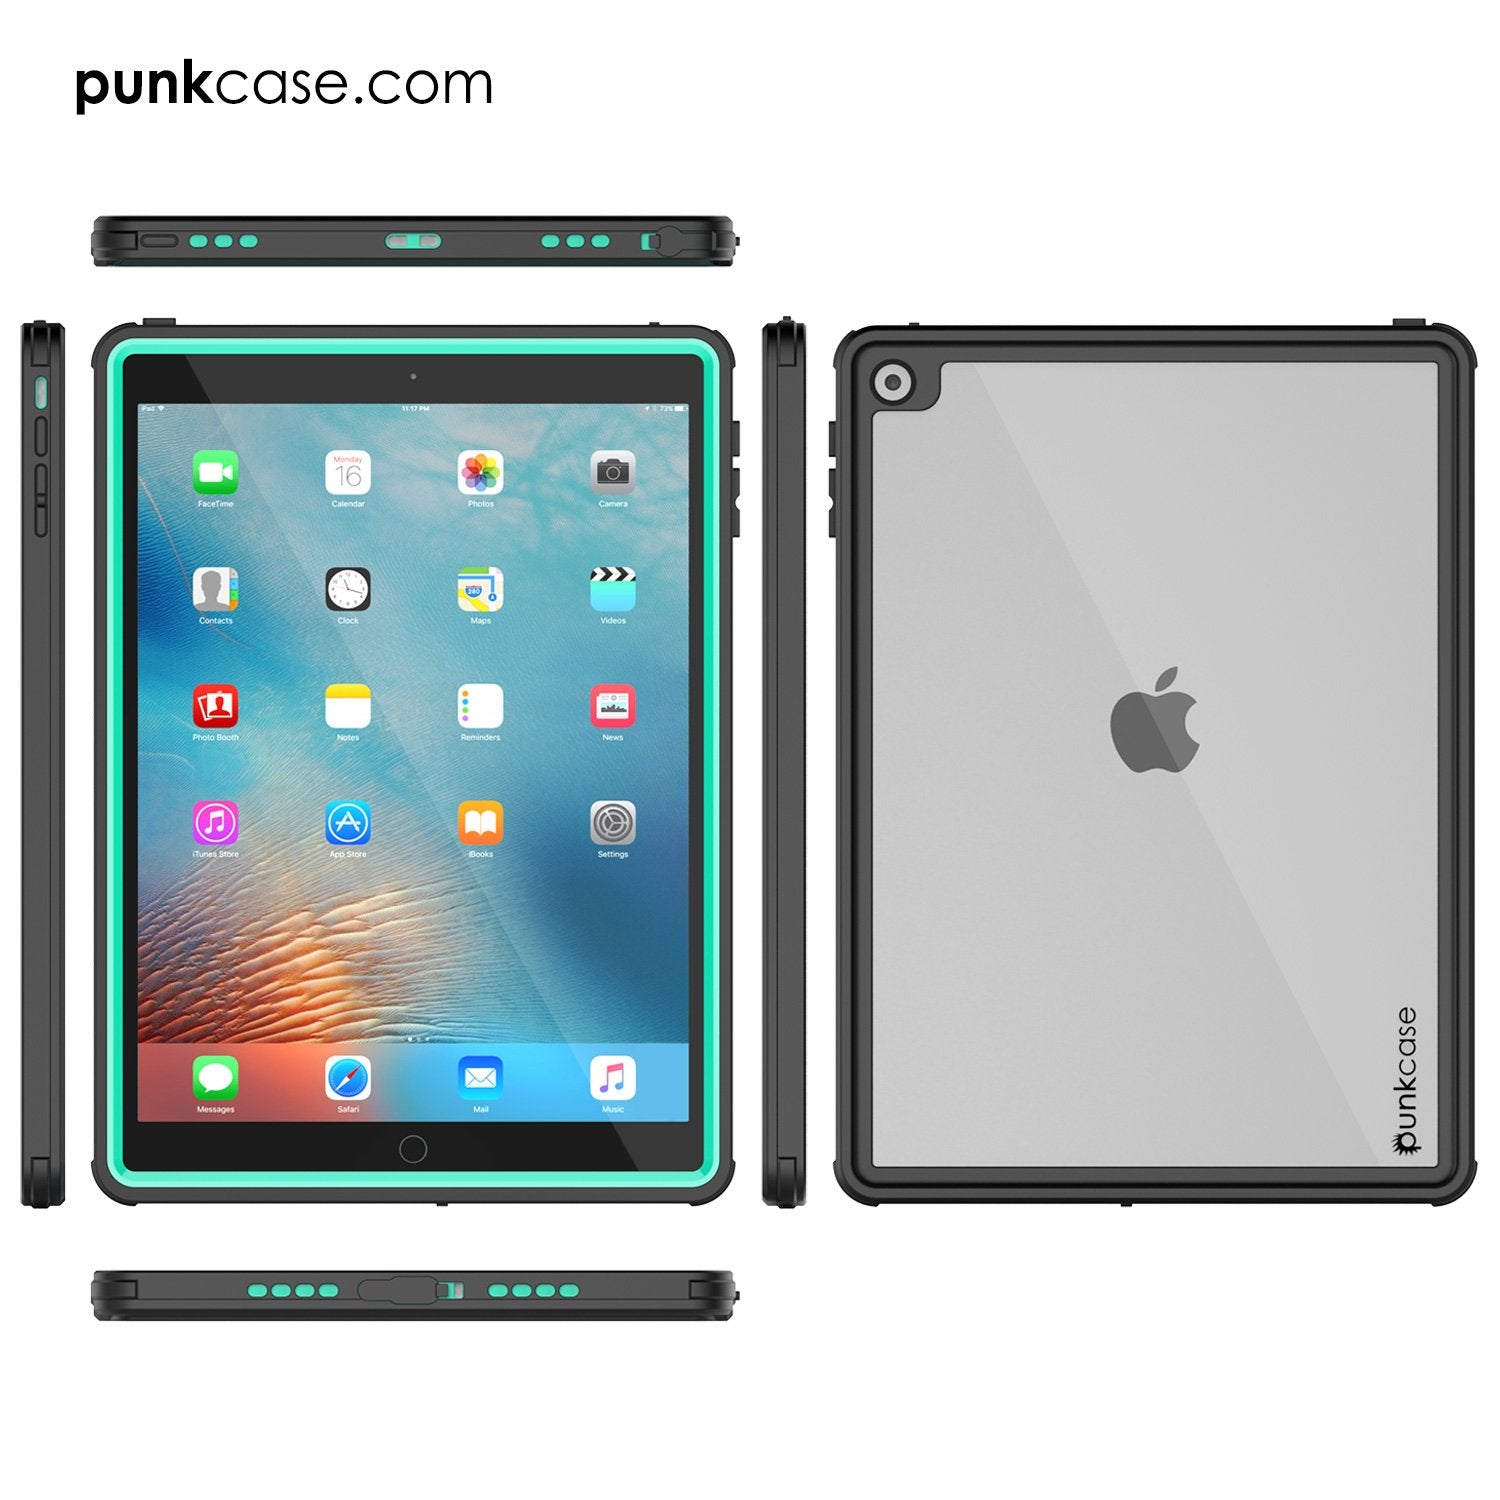 Punkcase iPad Pro 9.7 Case CRYSTAL Series Waterproof Cover [Teal]